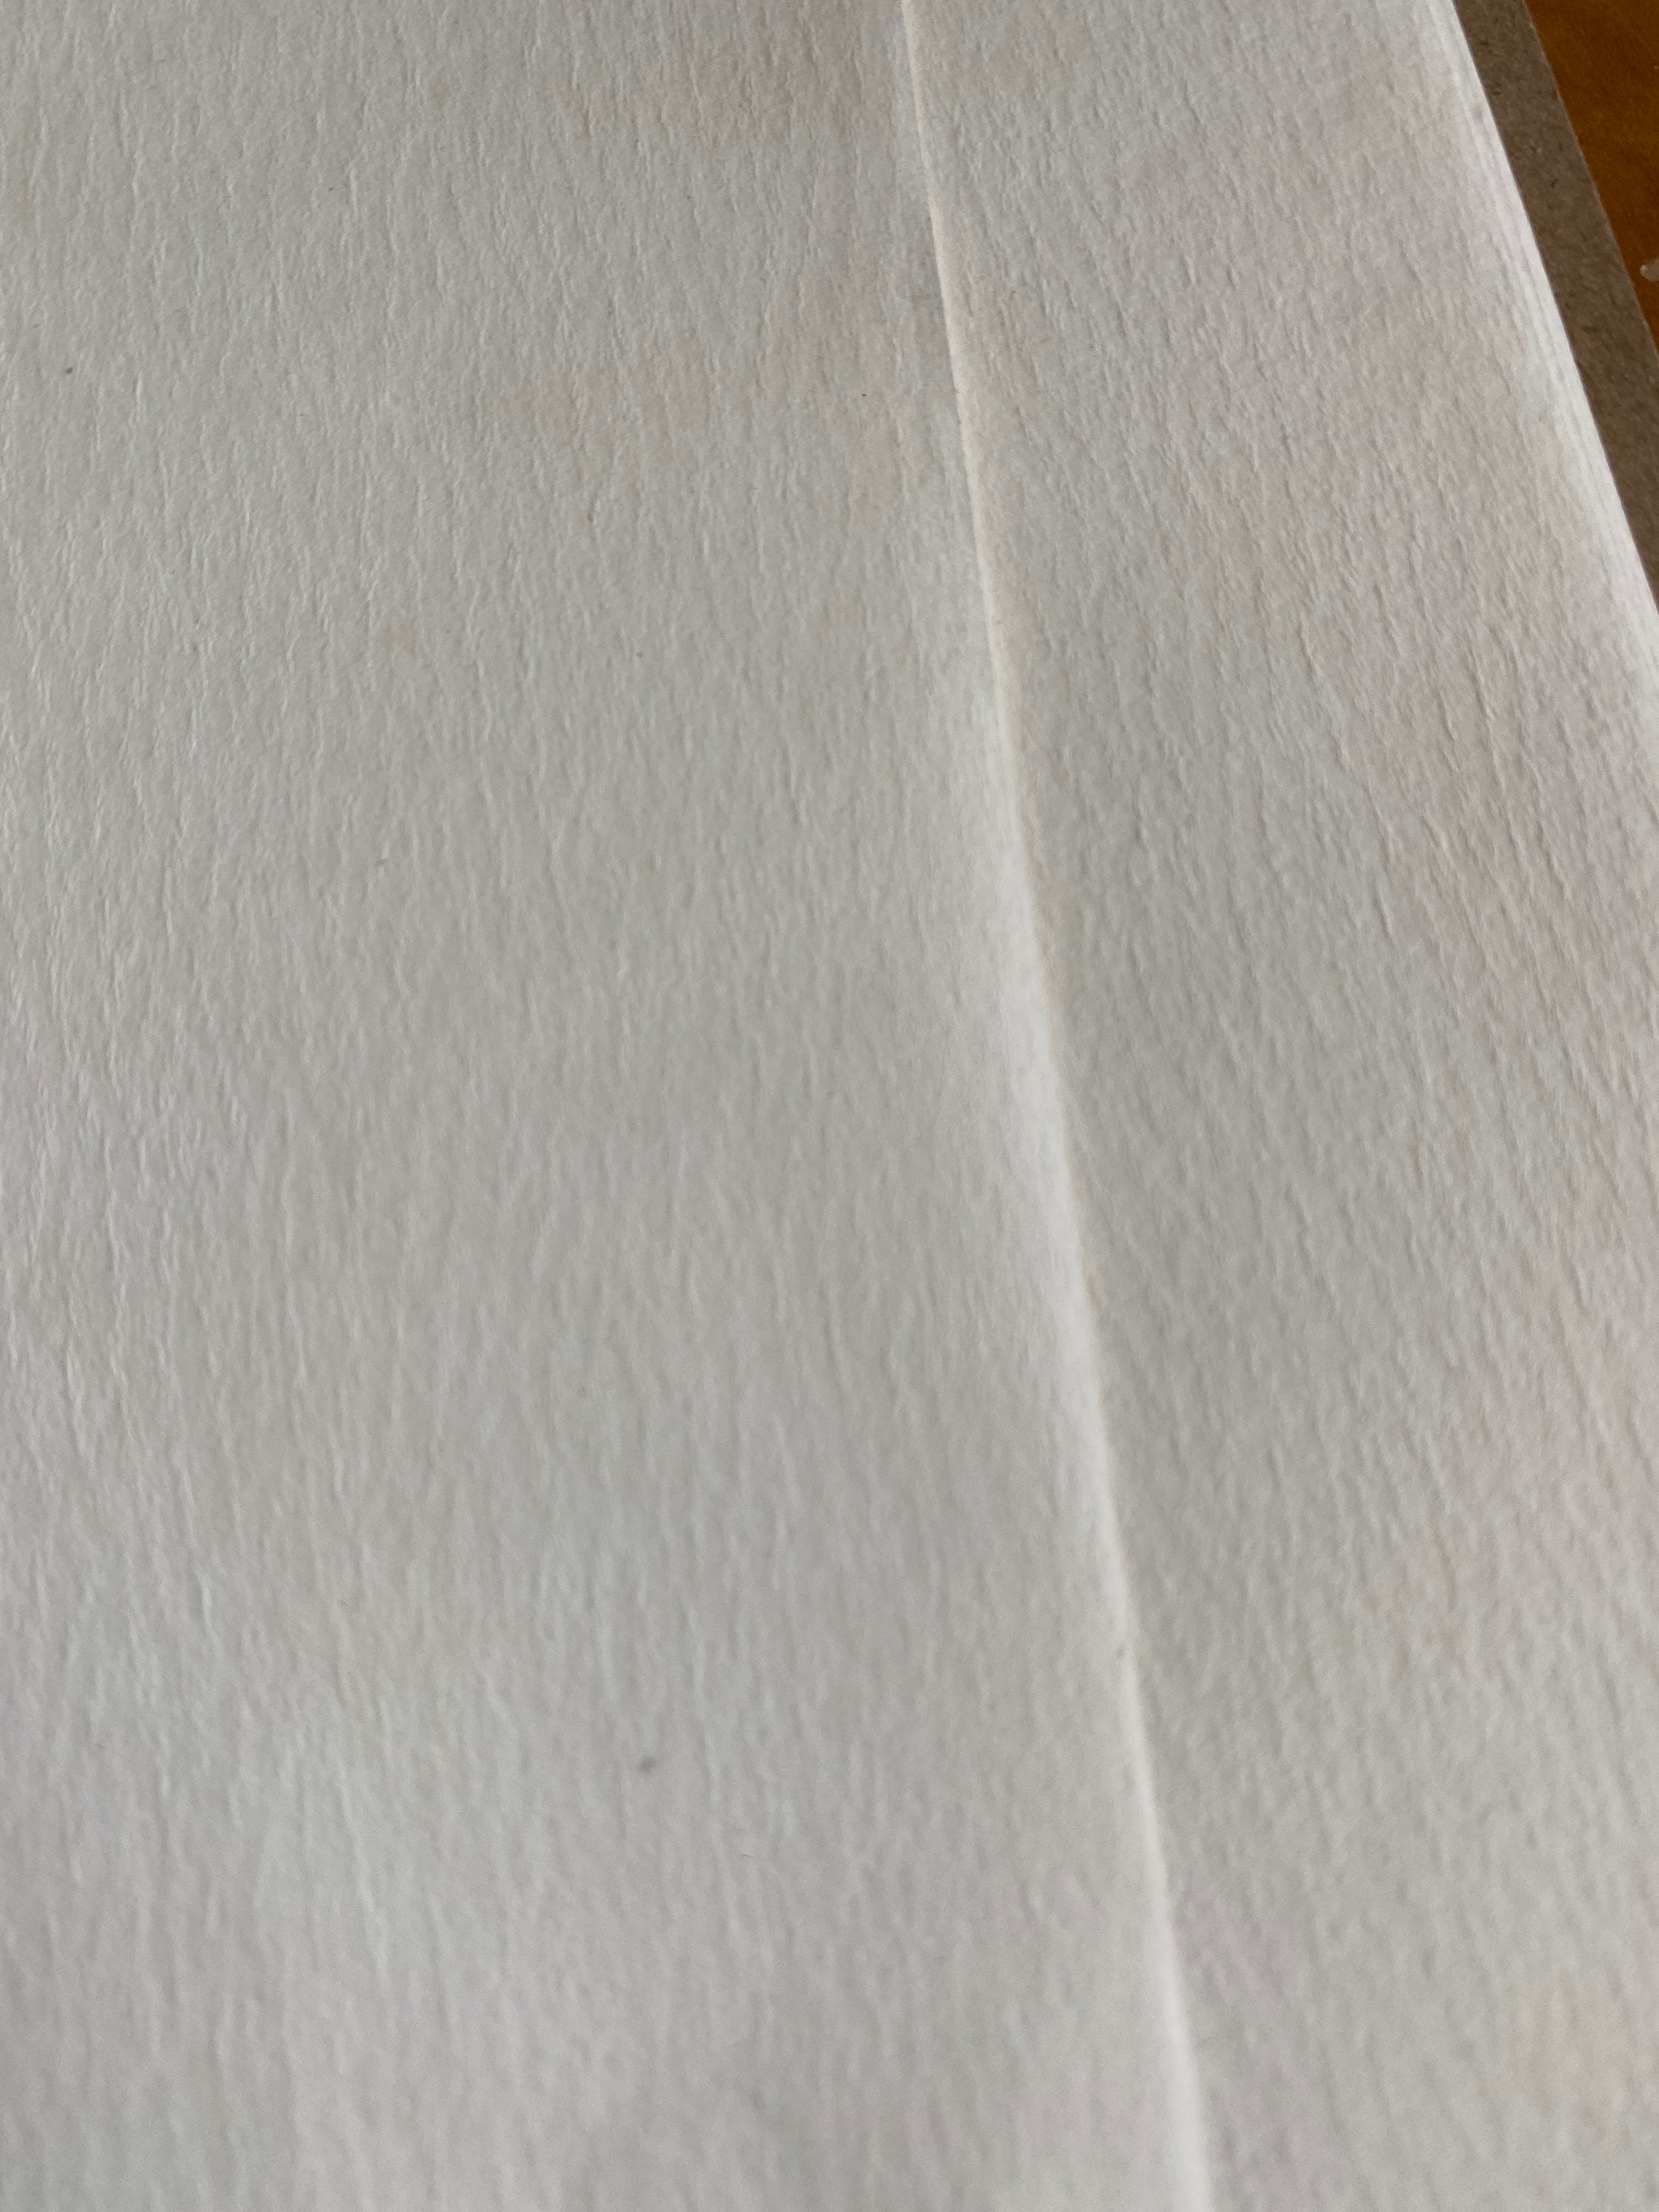 PA Paper™ Accents 8.5 x 11 50lb. White Onion Skin Paper, 25 Sheets